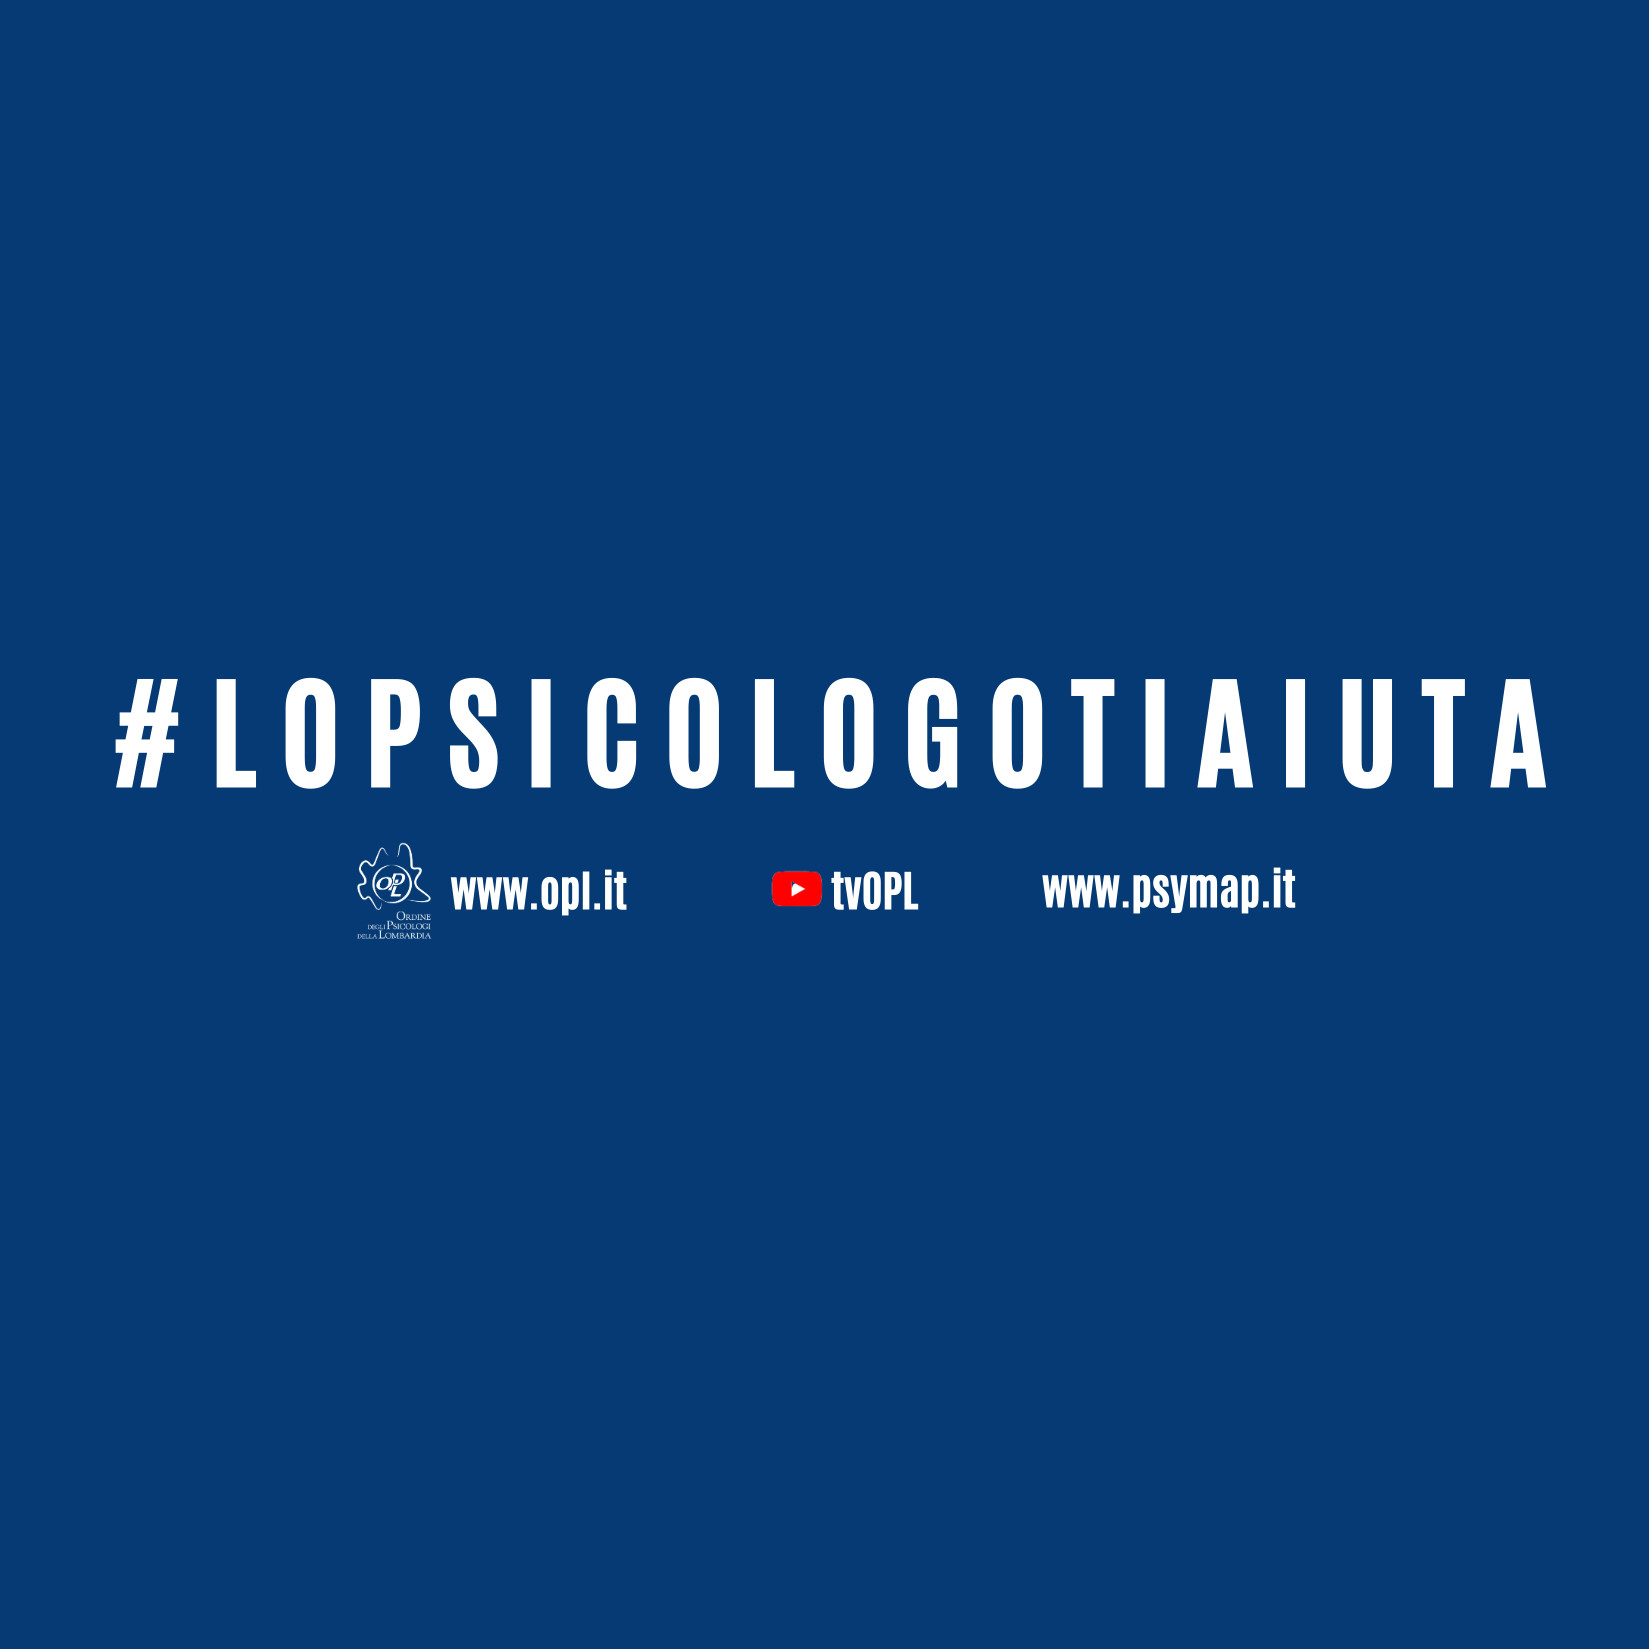 #LOPSICOLOGOTIAIUTA